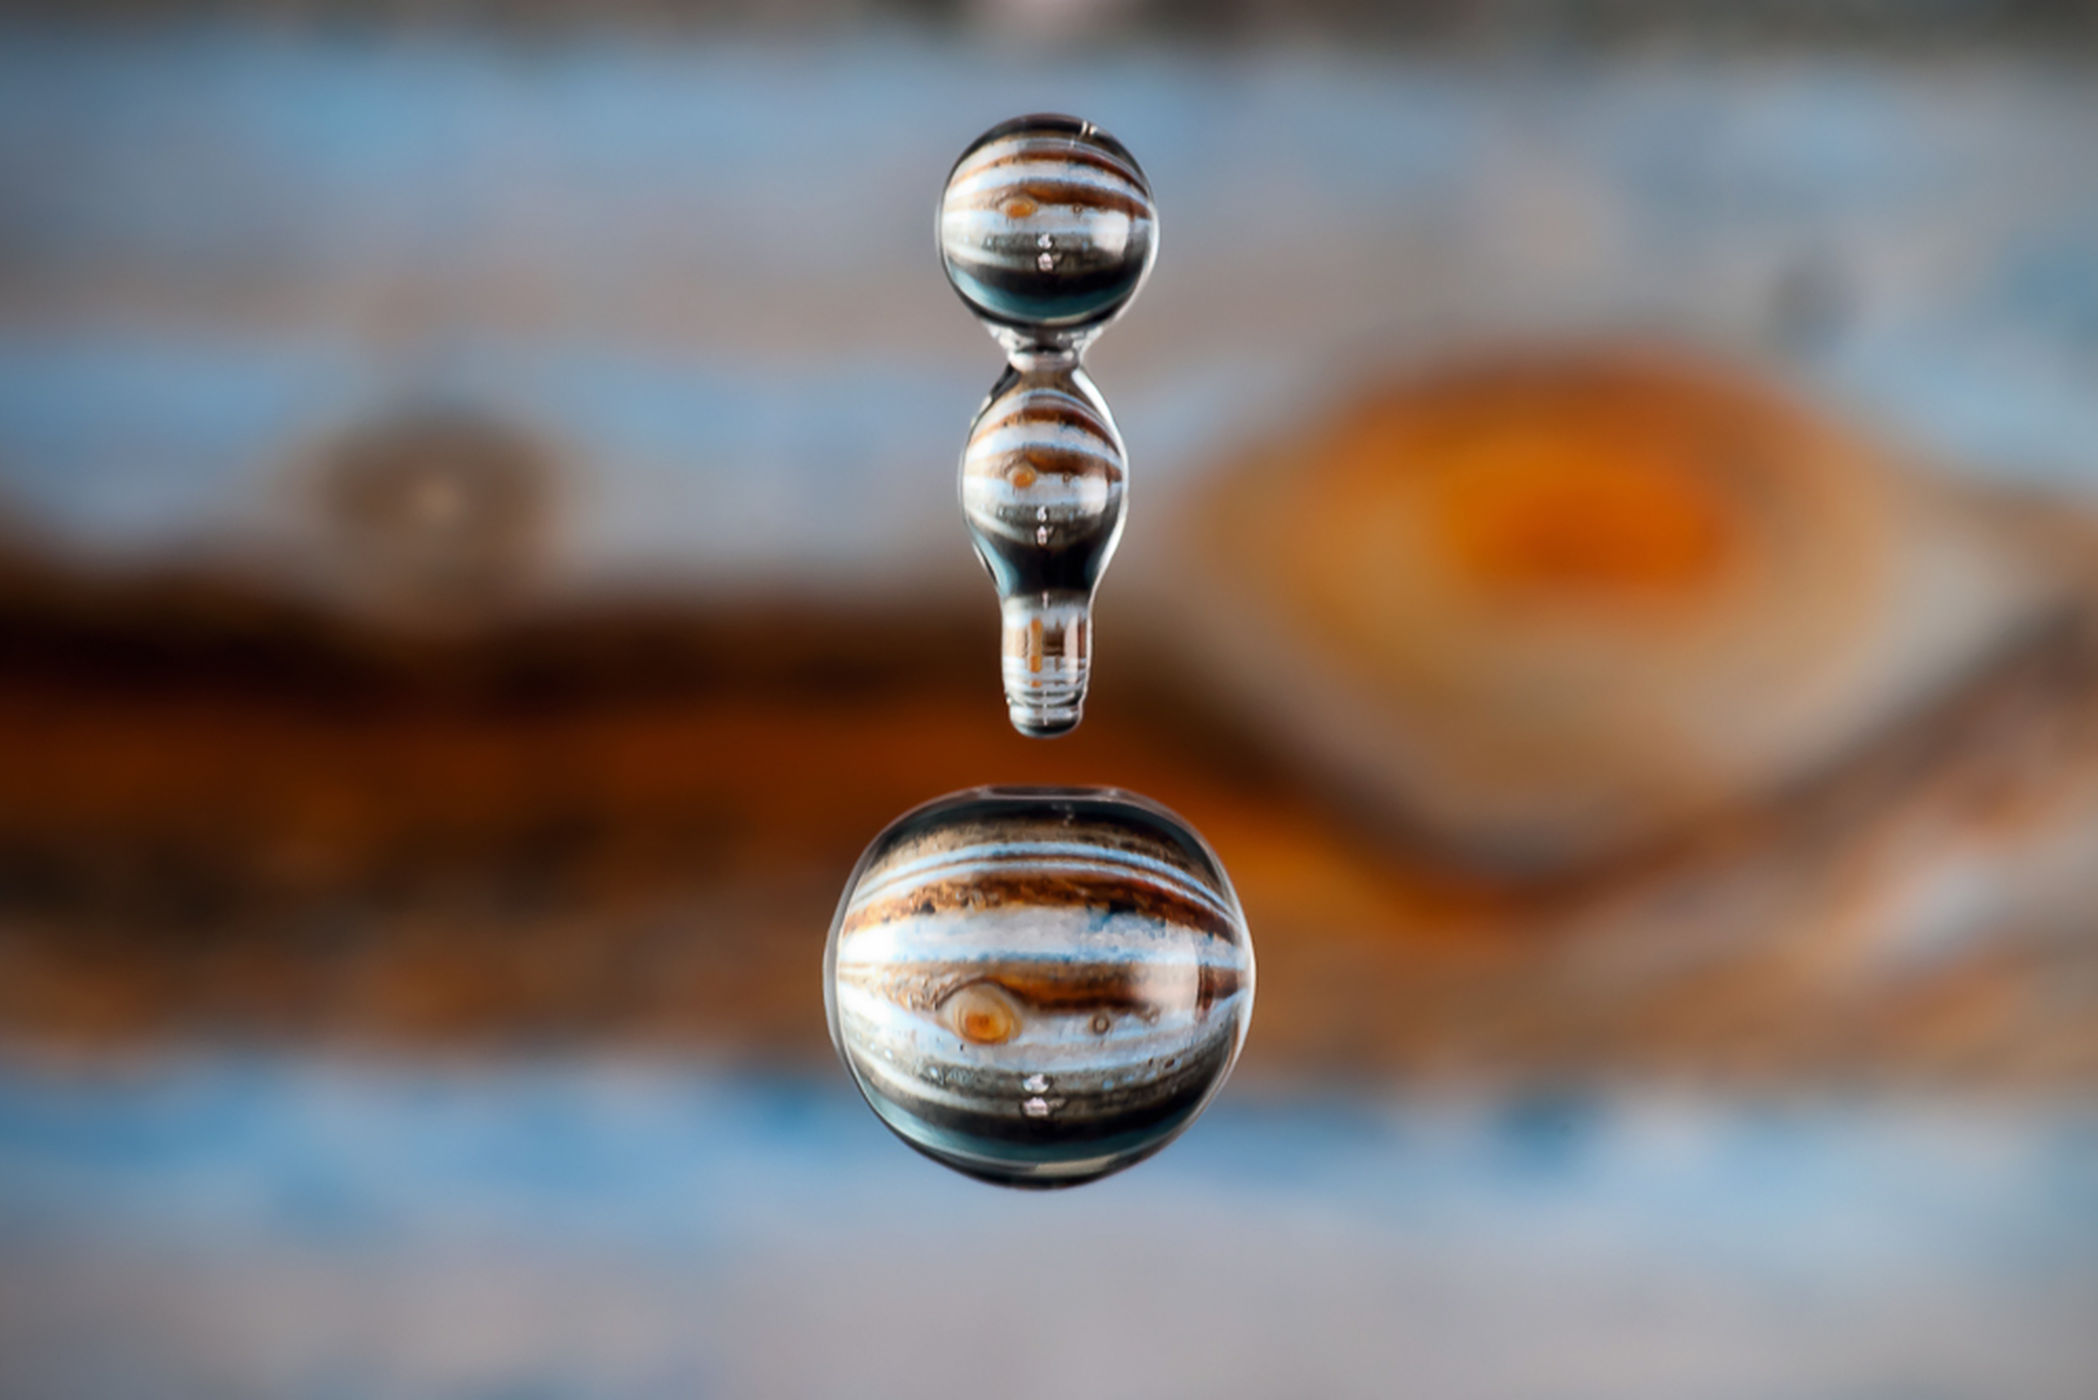 Droplets of water Art (Jupiter)